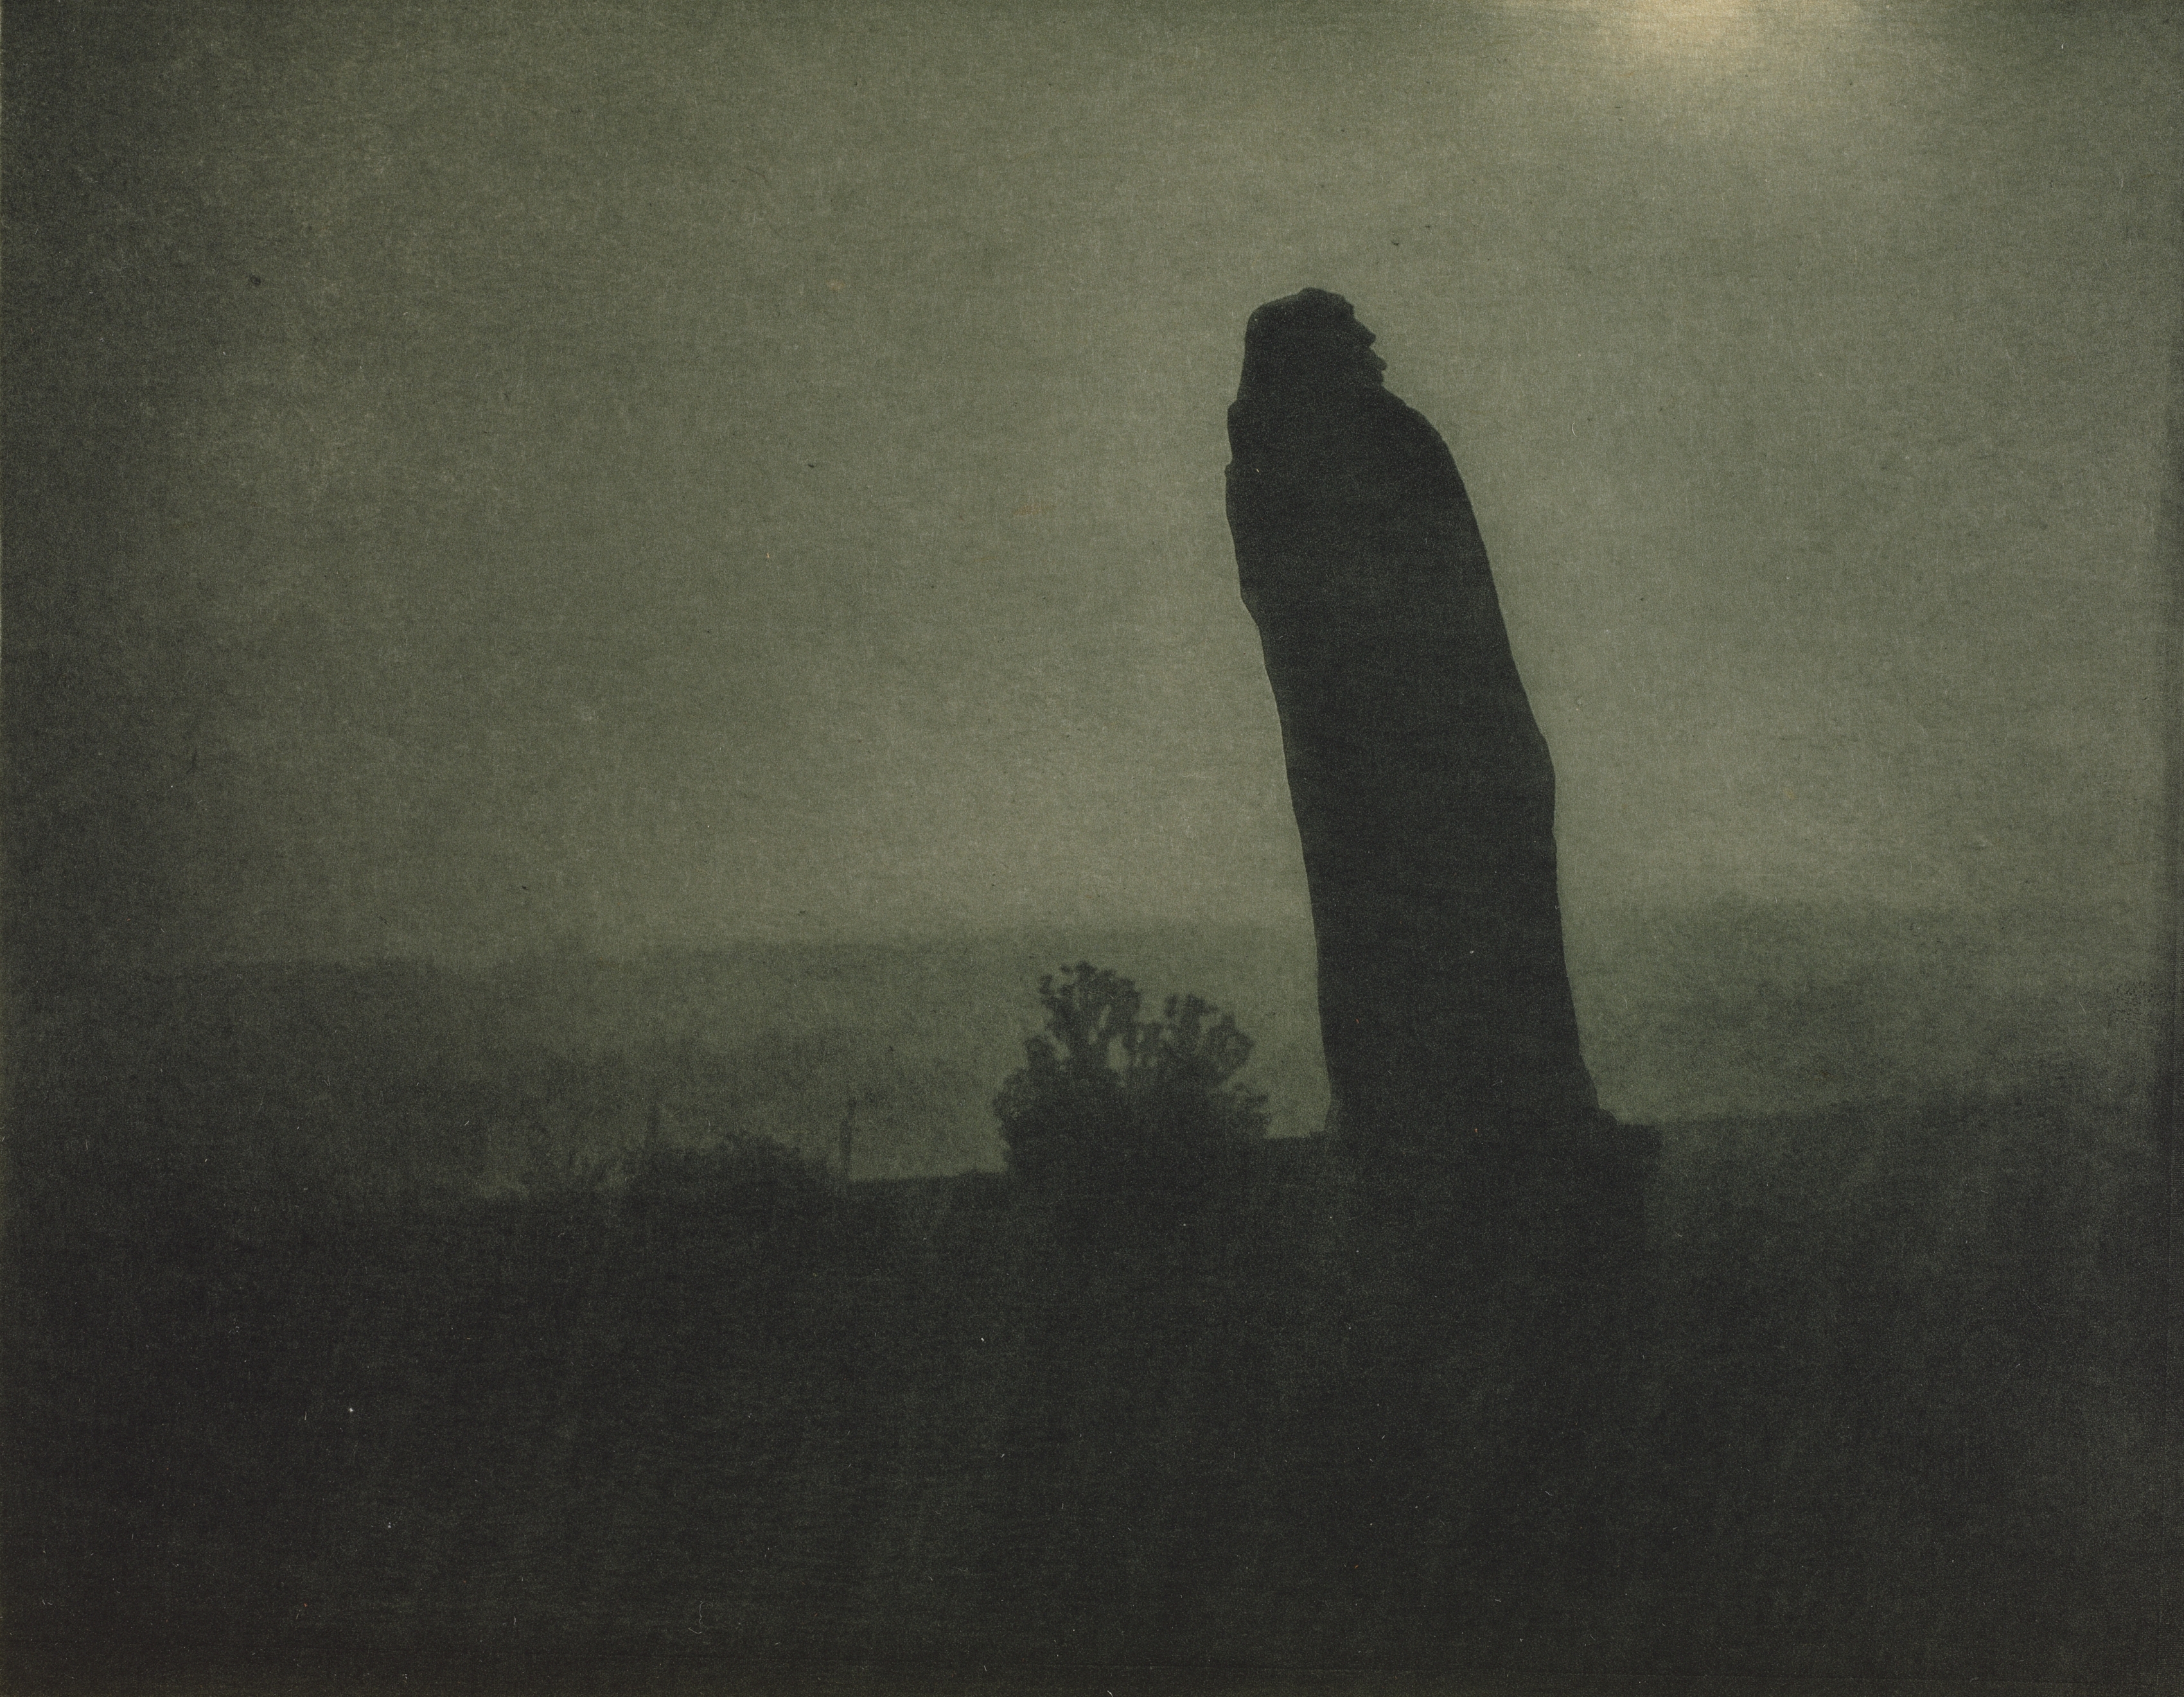 Camera Work: Balzac - The Silhouette, Four A.M.